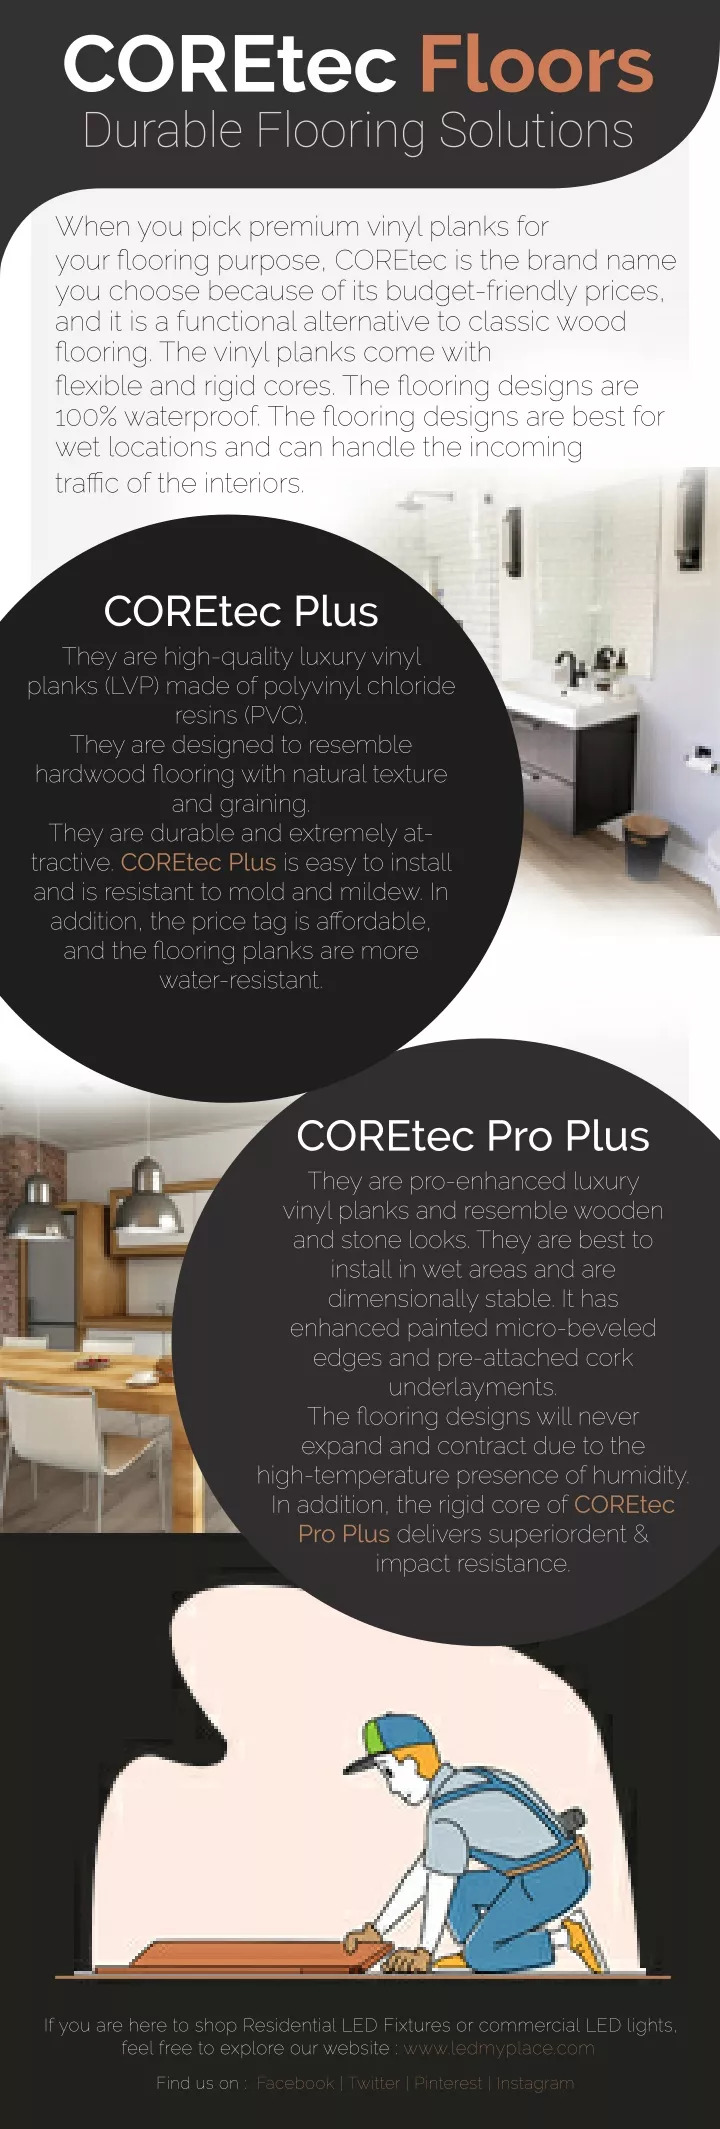 coretec floors durable flooring solutions